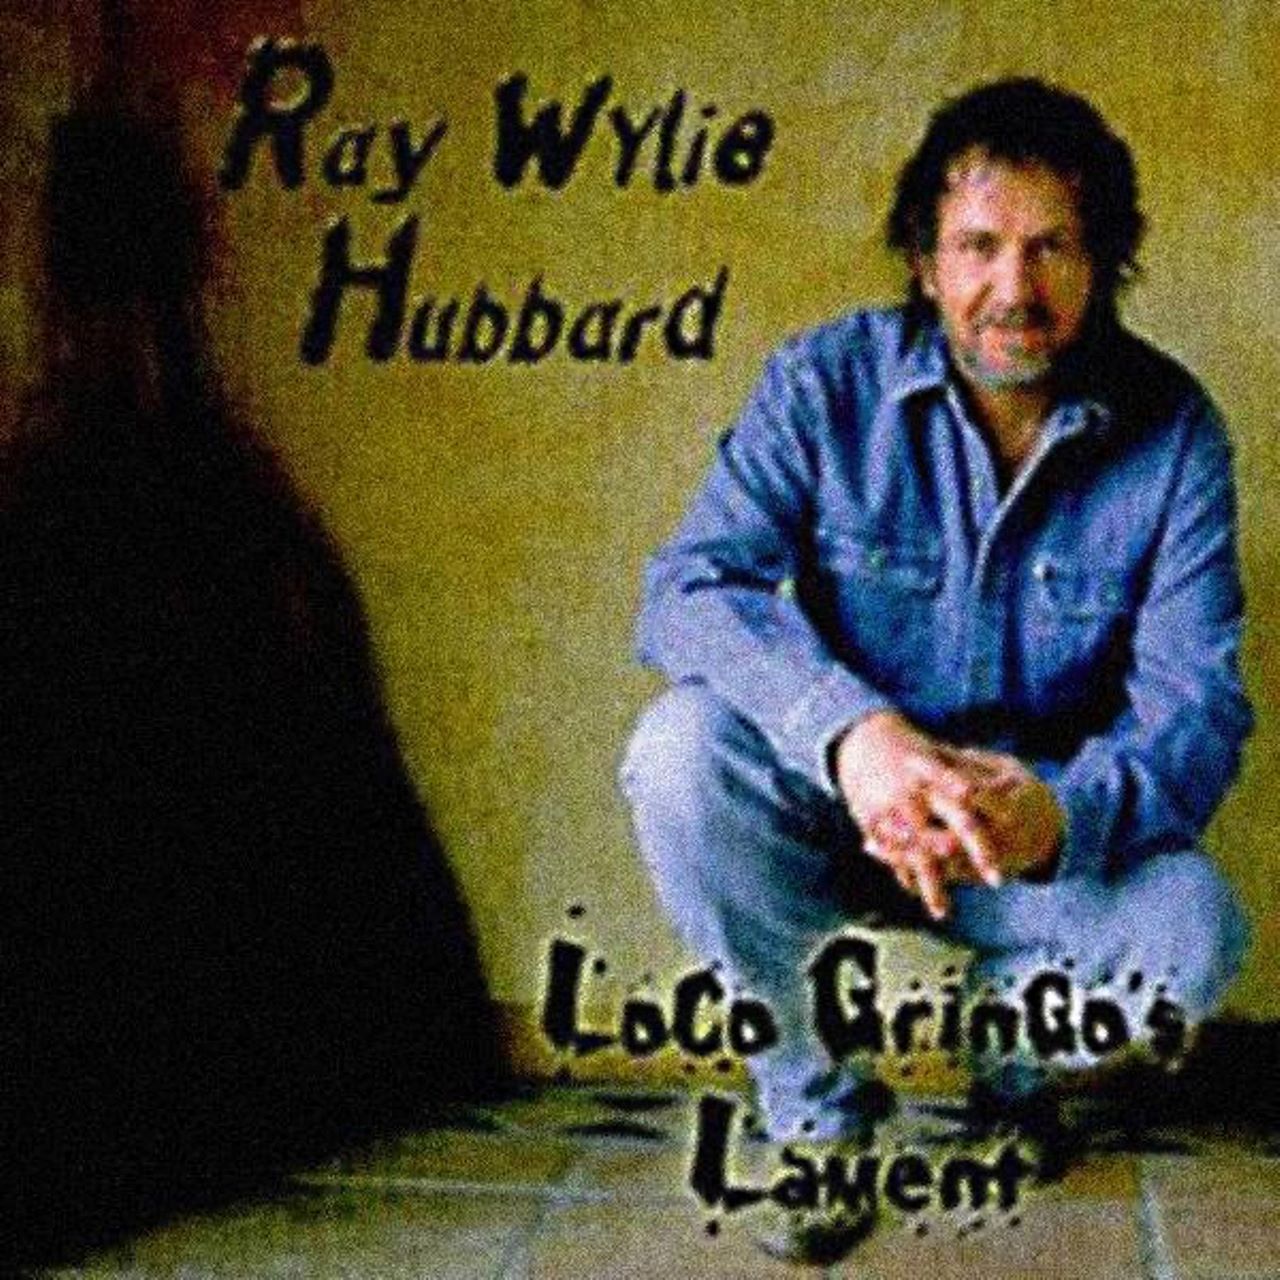 Ray Wylie Hubbard - Loco Gringo's Lament cover album